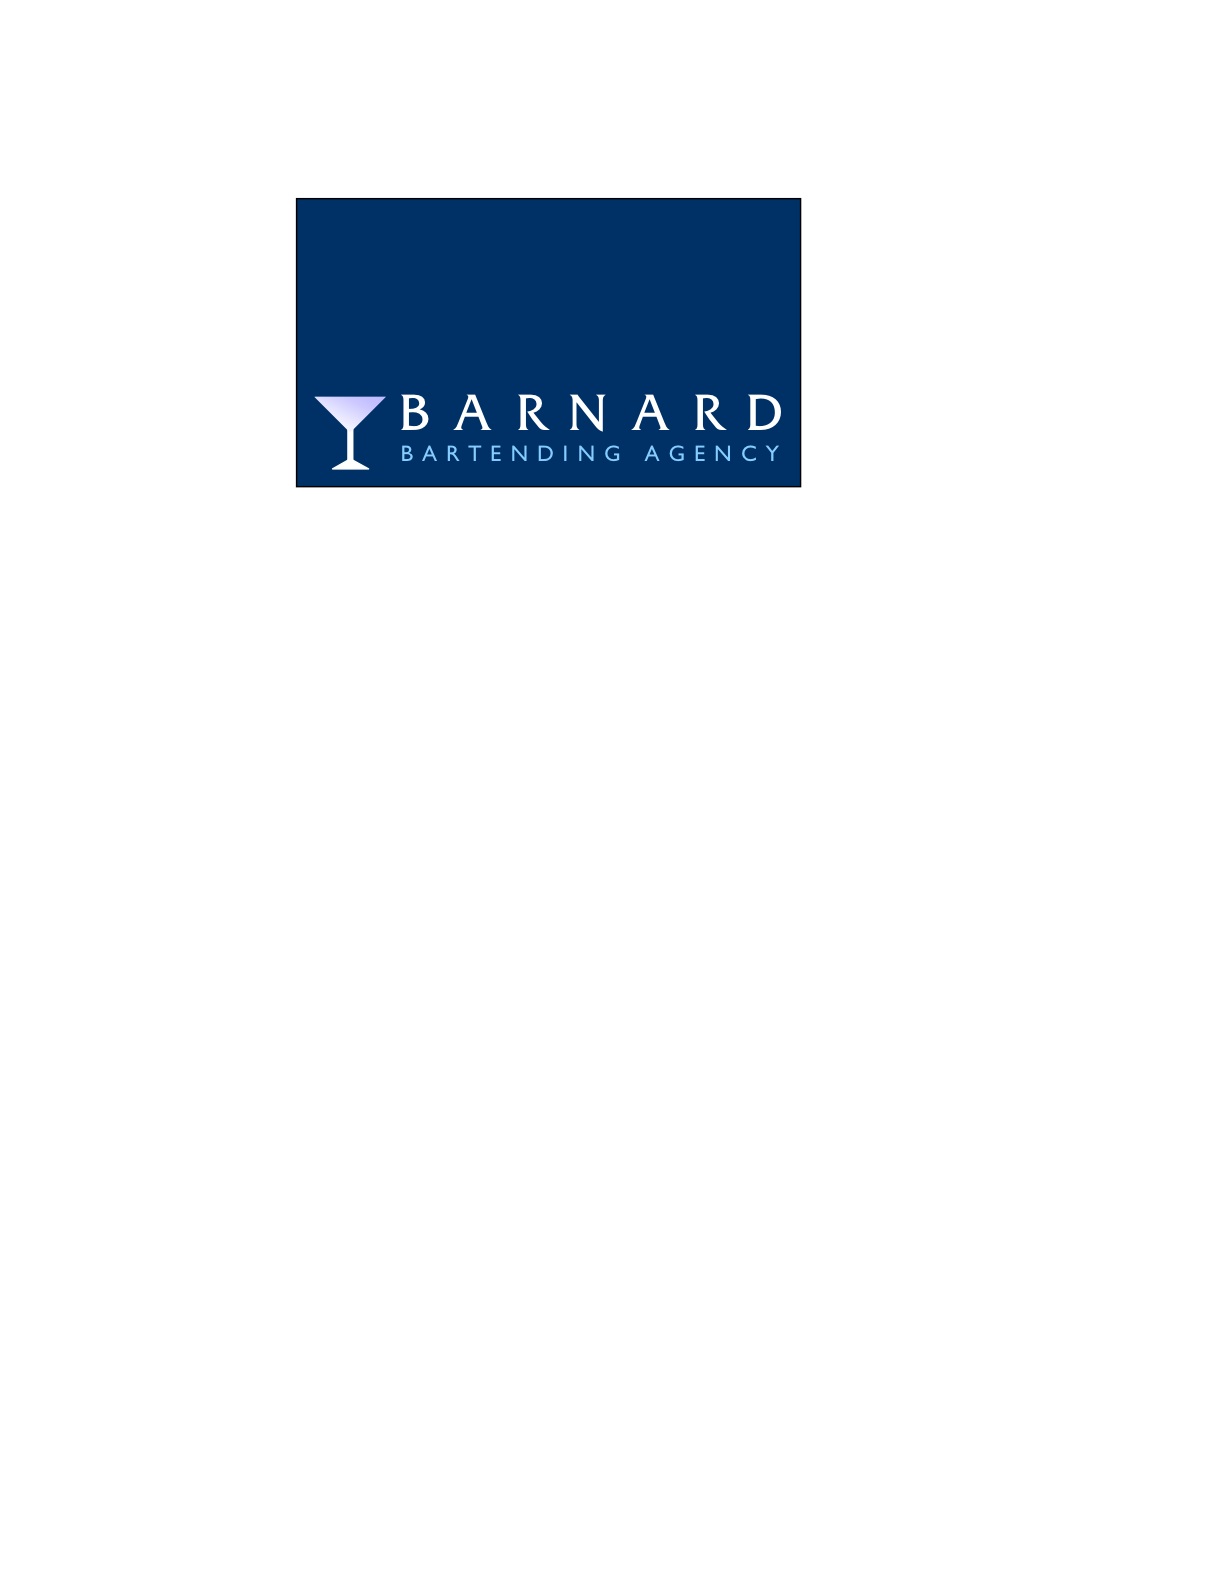 Photo of Barnard Bartending Agency in New York City, New York, United States - 1 Picture of Point of interest, Establishment